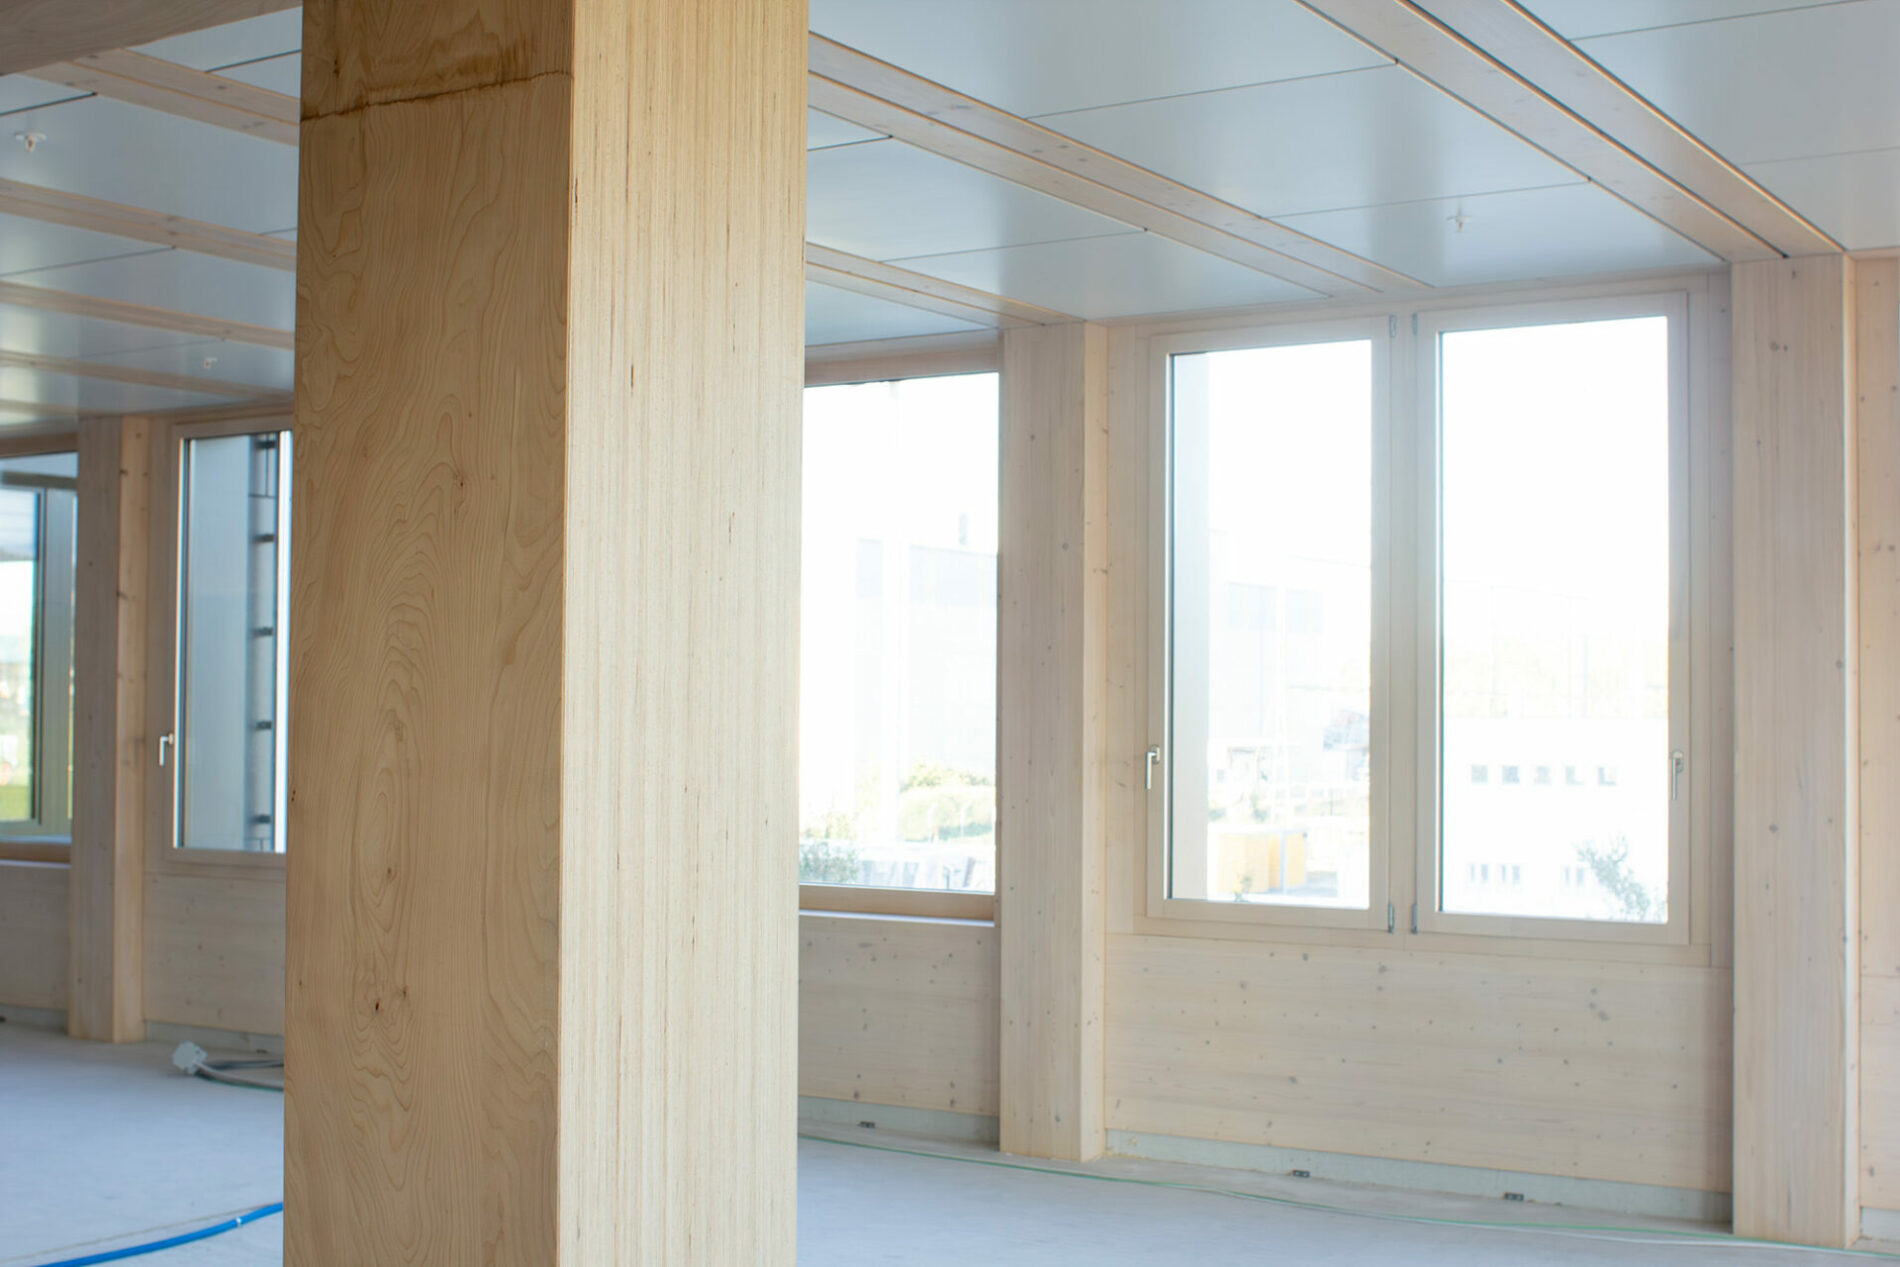 mass timber wooden structure interior